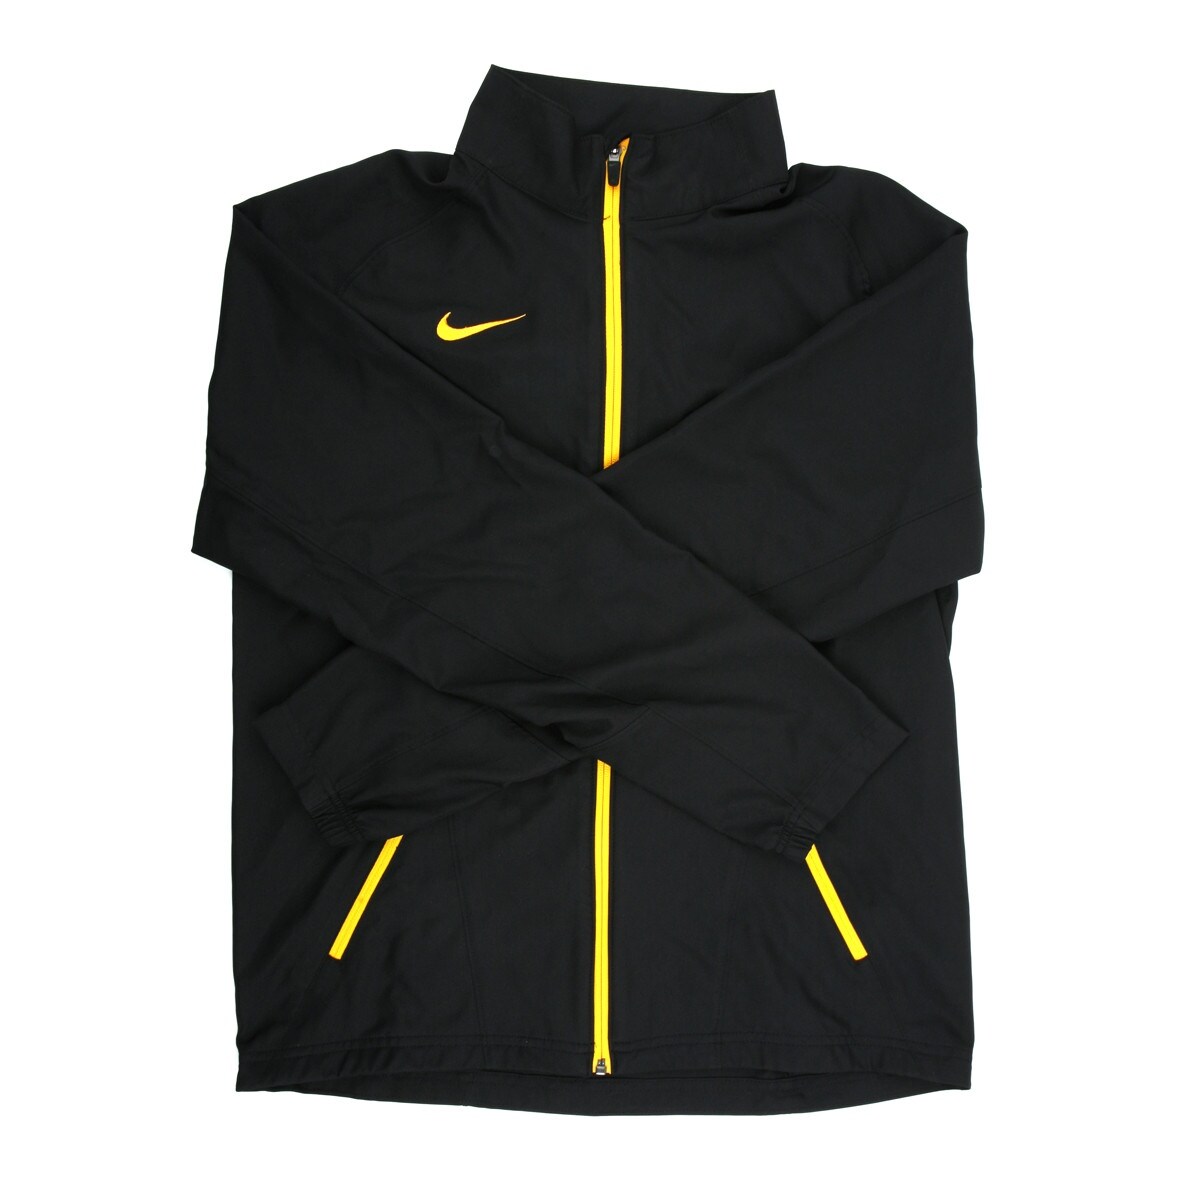 nike yellow and black jacket